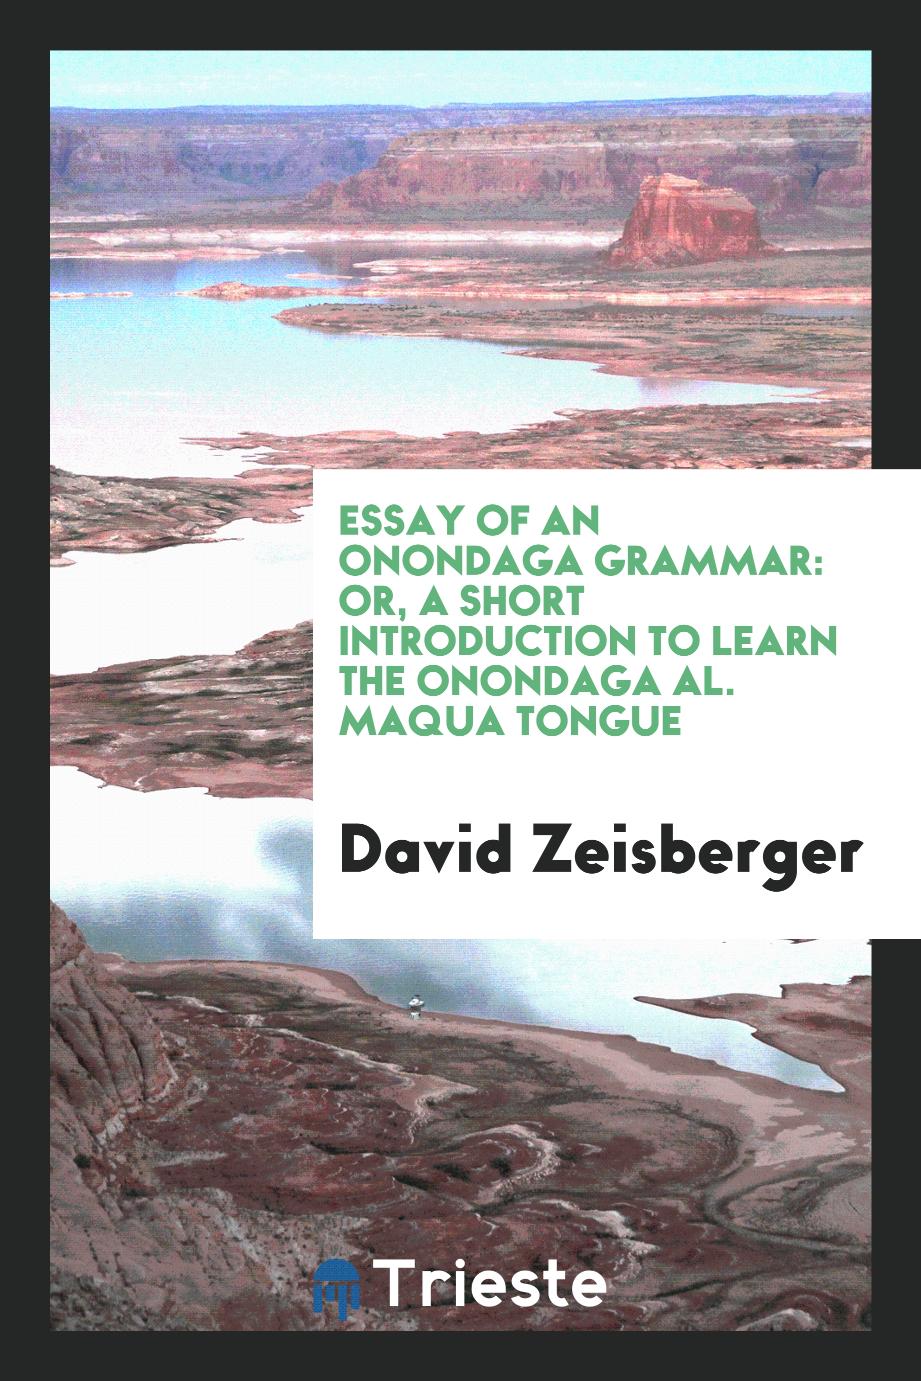 Essay of an Onondaga Grammar: Or, A Short Introduction to Learn the Onondaga Al. Maqua Tongue